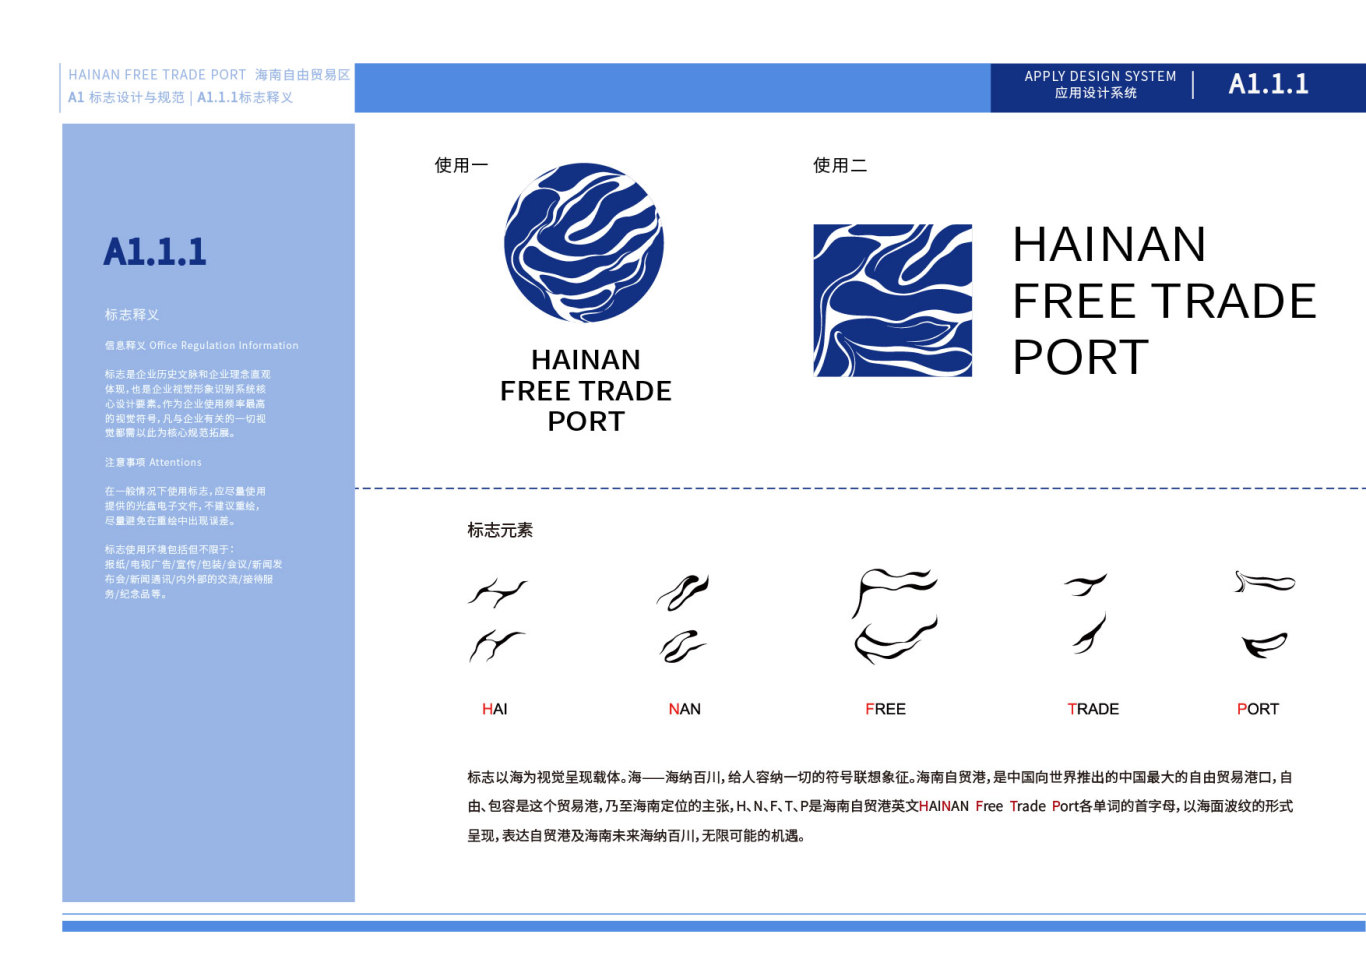 海南自由贸易区 HAINAN FREE TRADE PORT图1